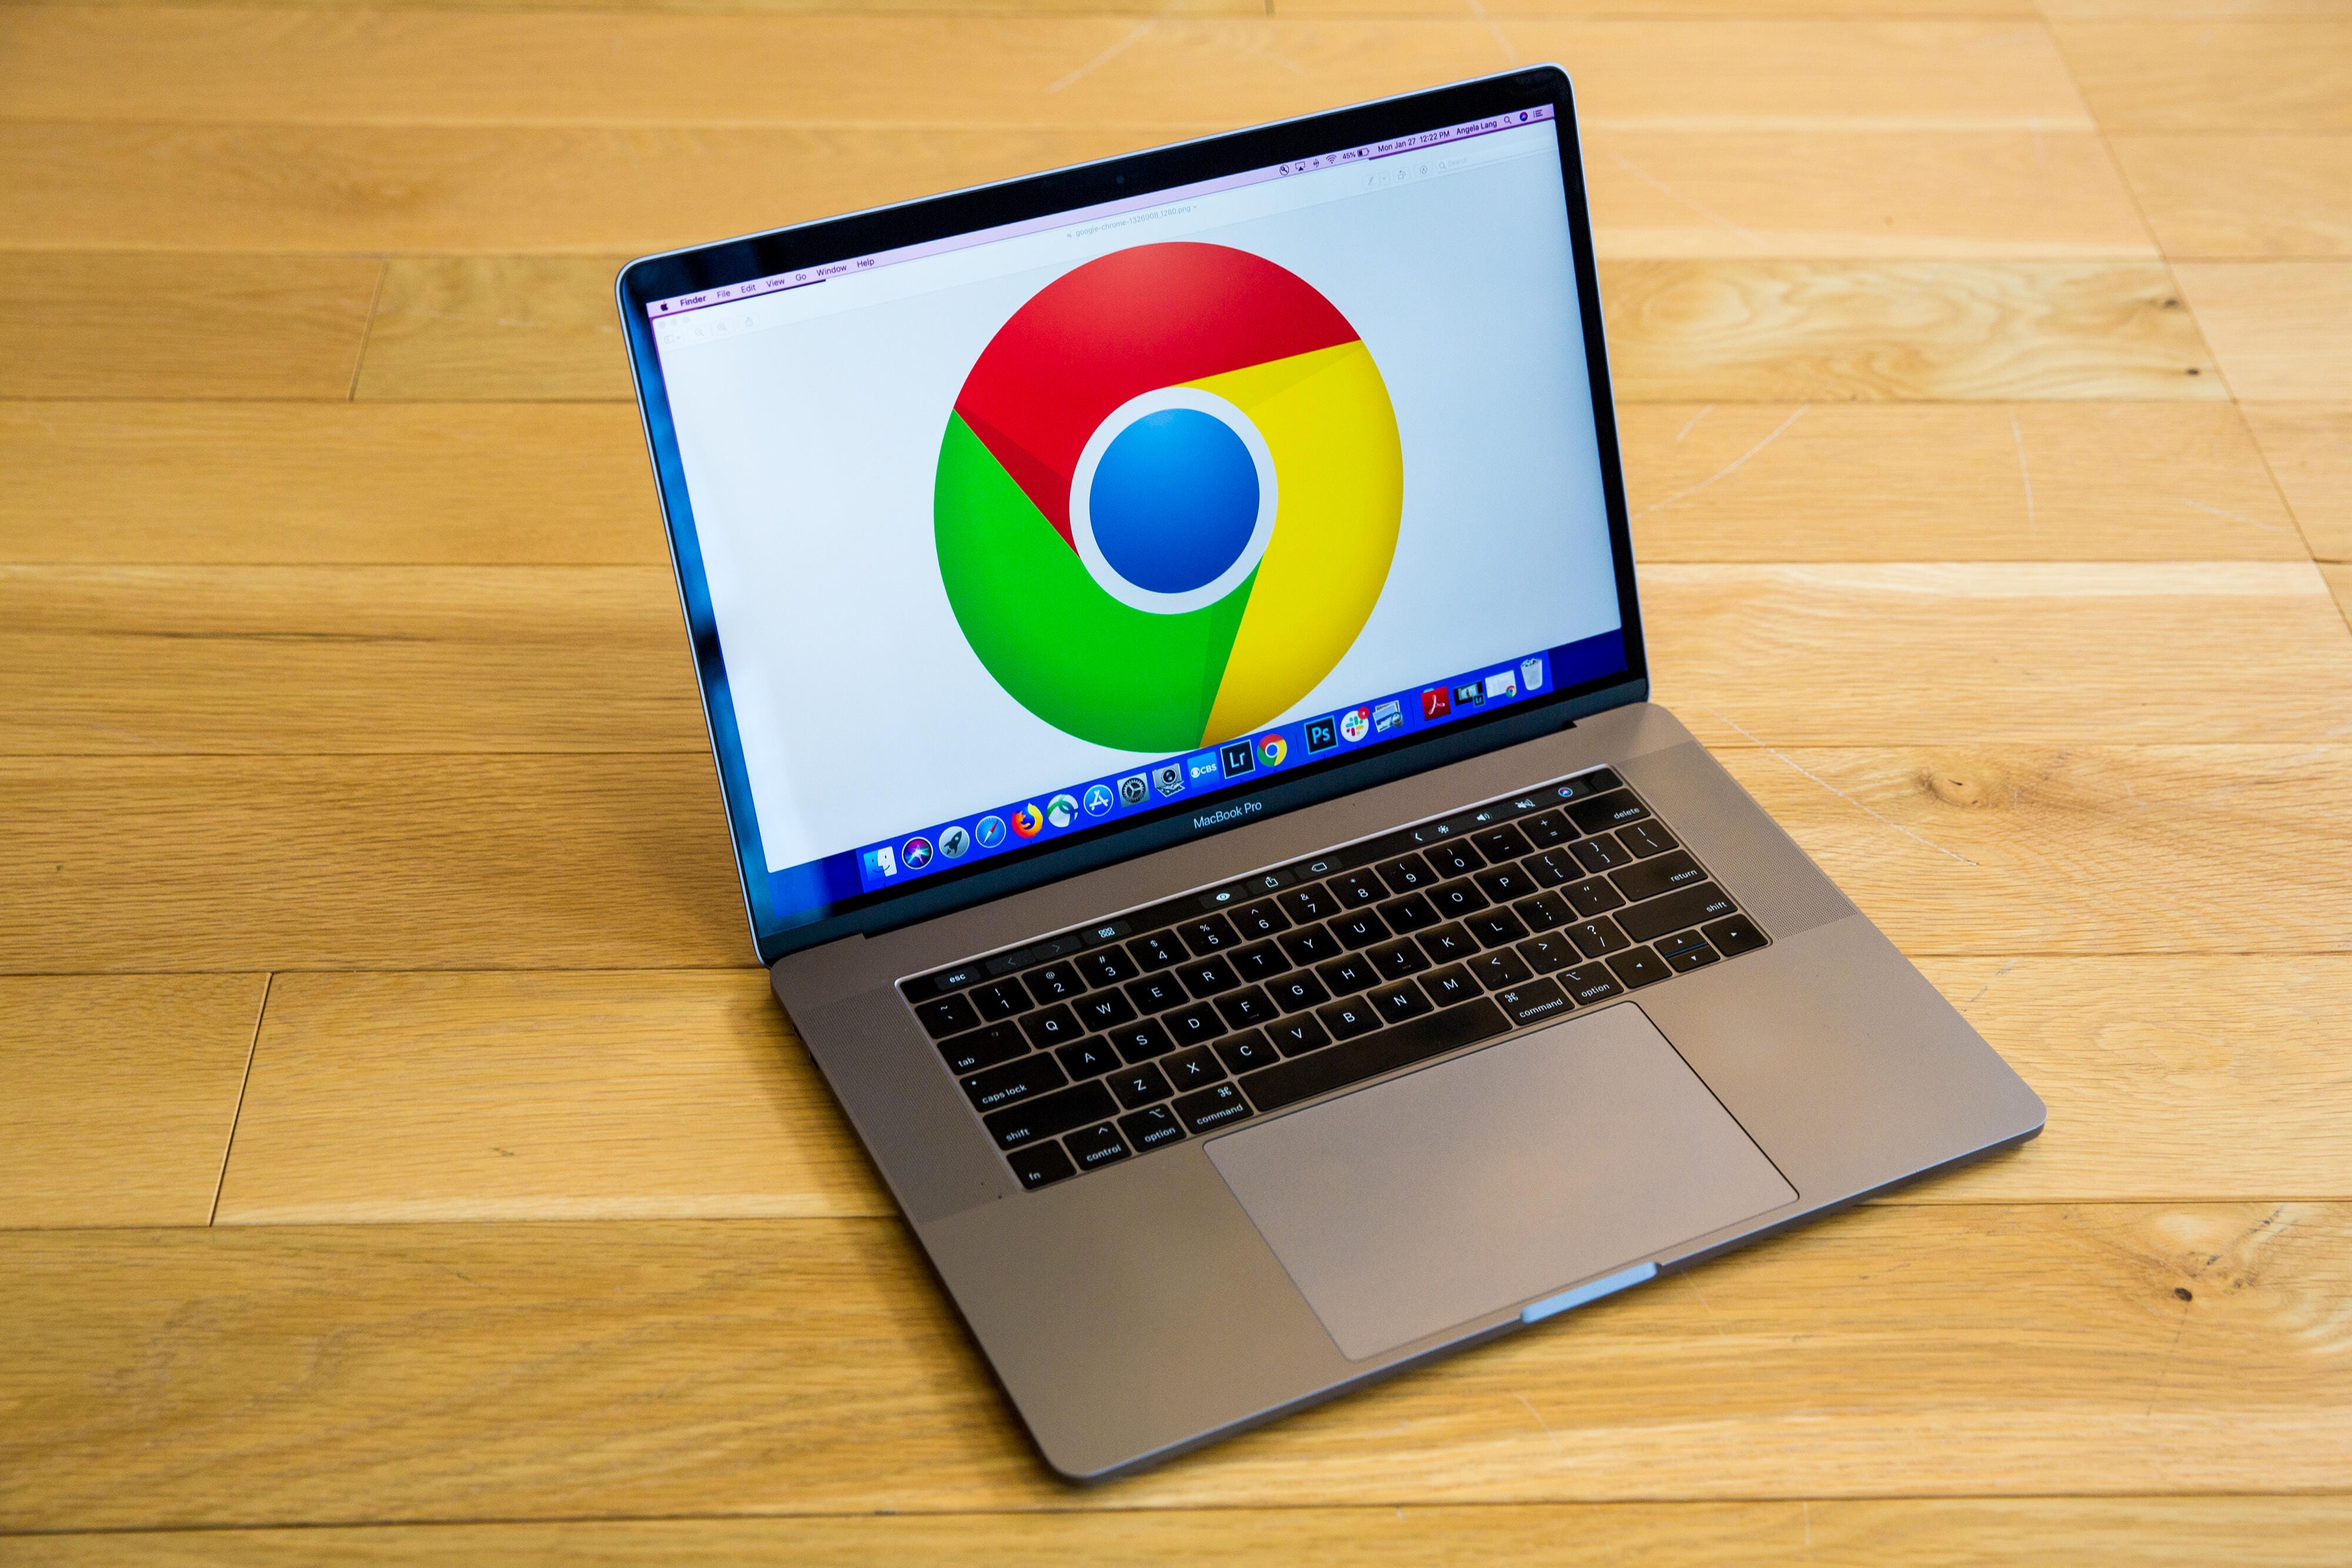 Chrome logo on laptop screen